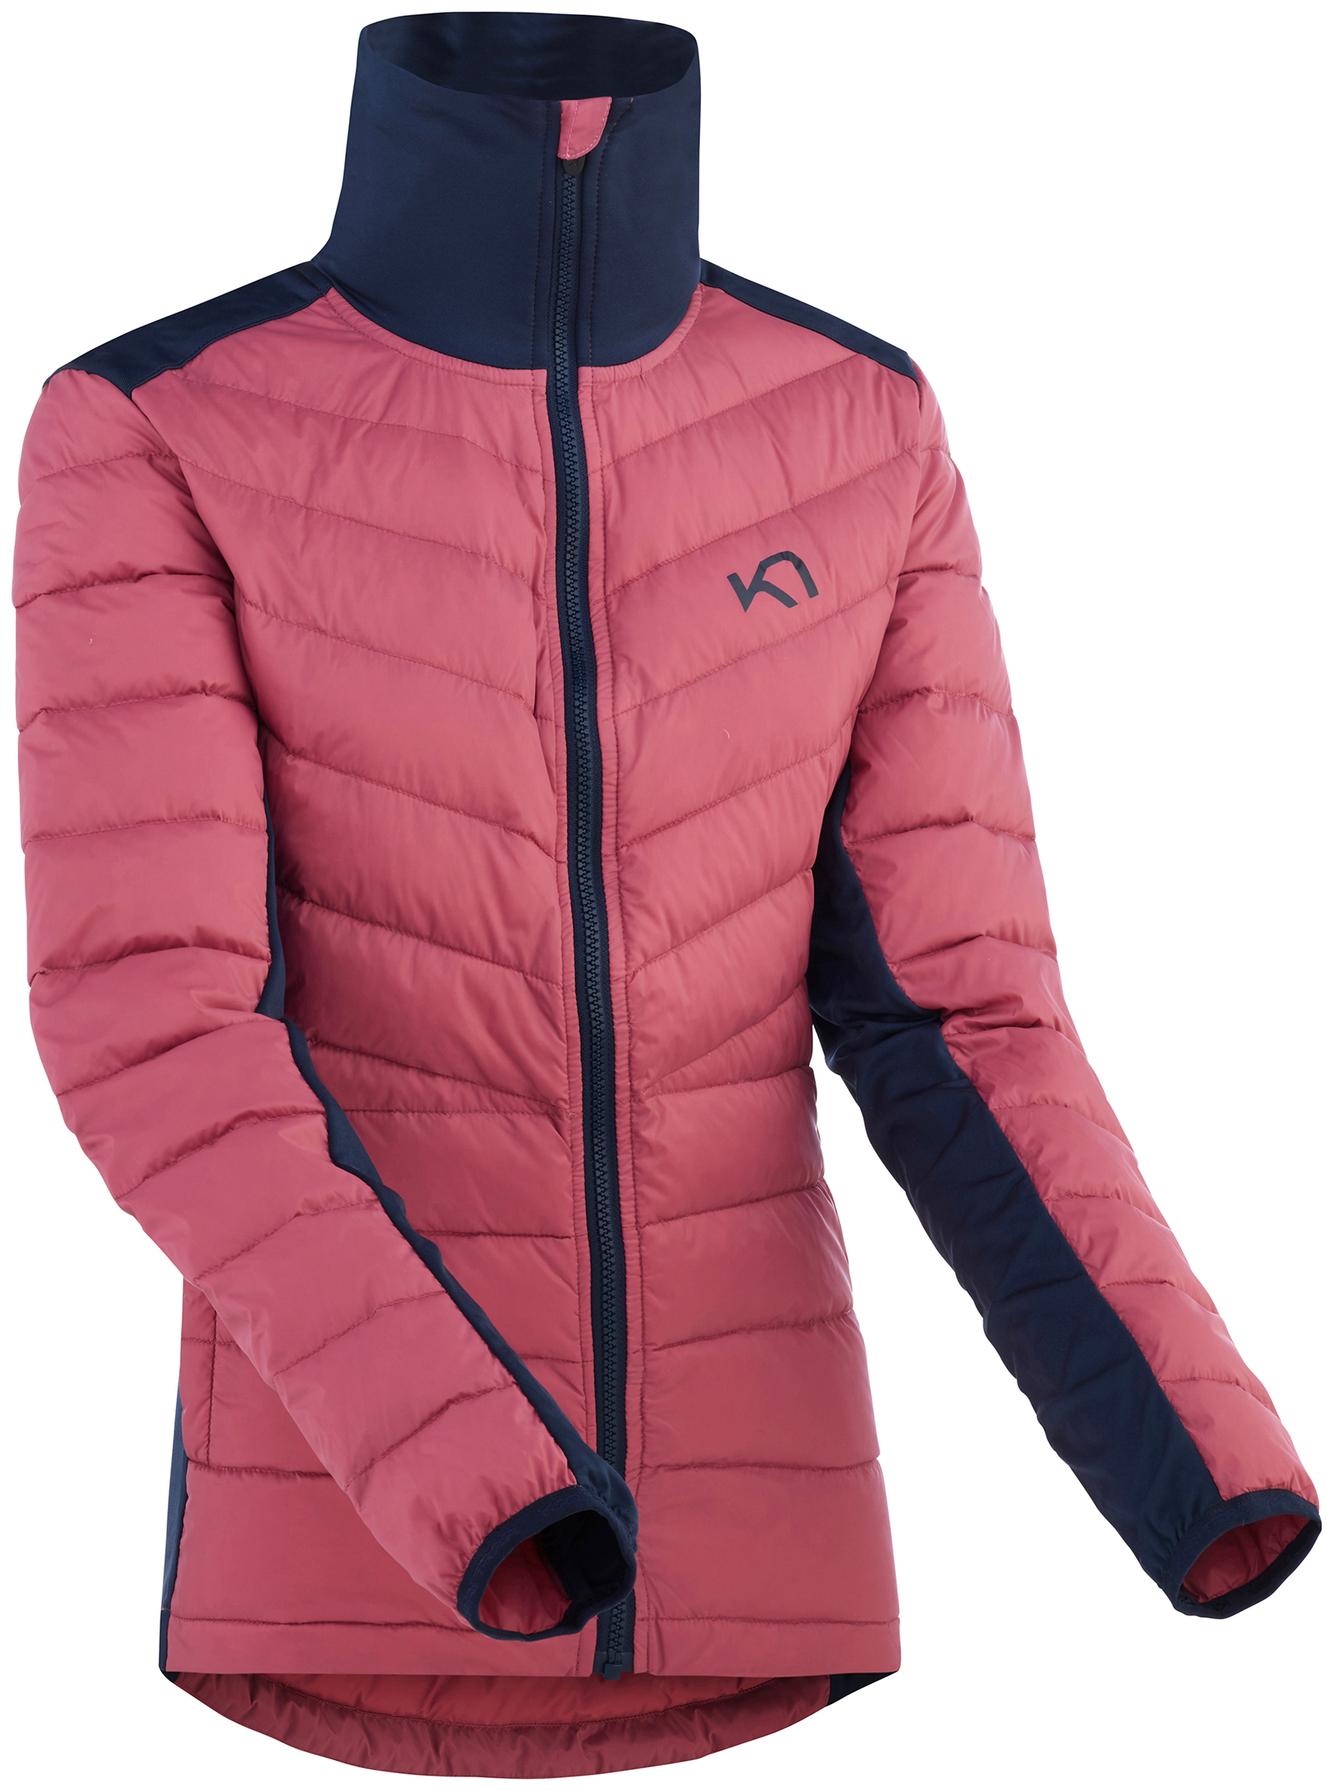 Куртка Для Активного Отдыха Karri Traa 2020-21 Eva Hybrid Lilac (Us:s), 2020-21